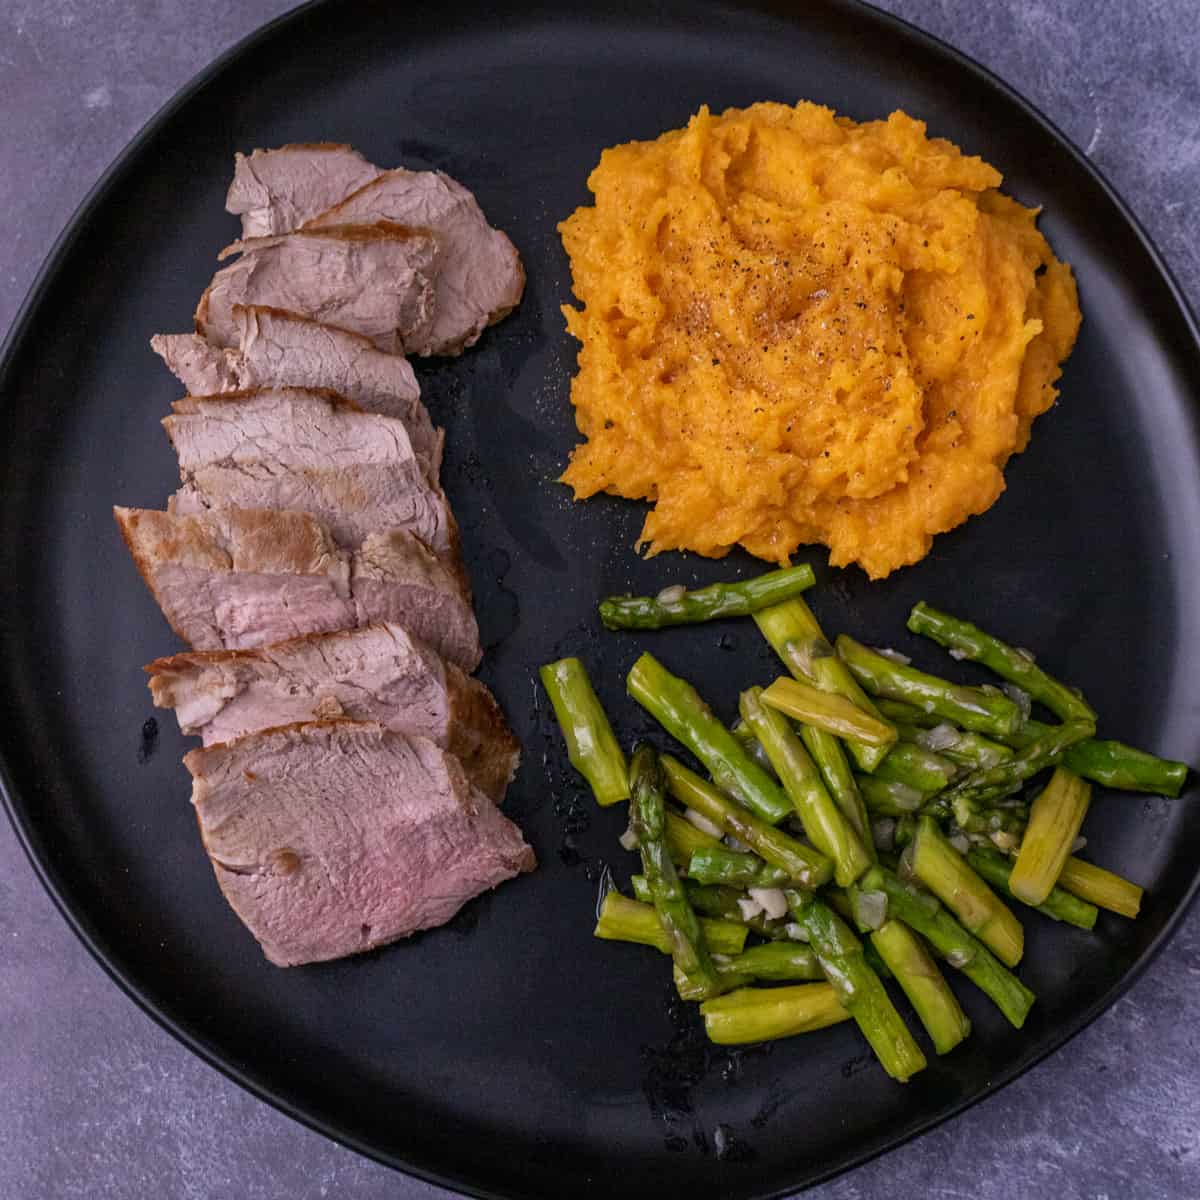 Black plate with pork tenderloin, butternut squash and asparagus